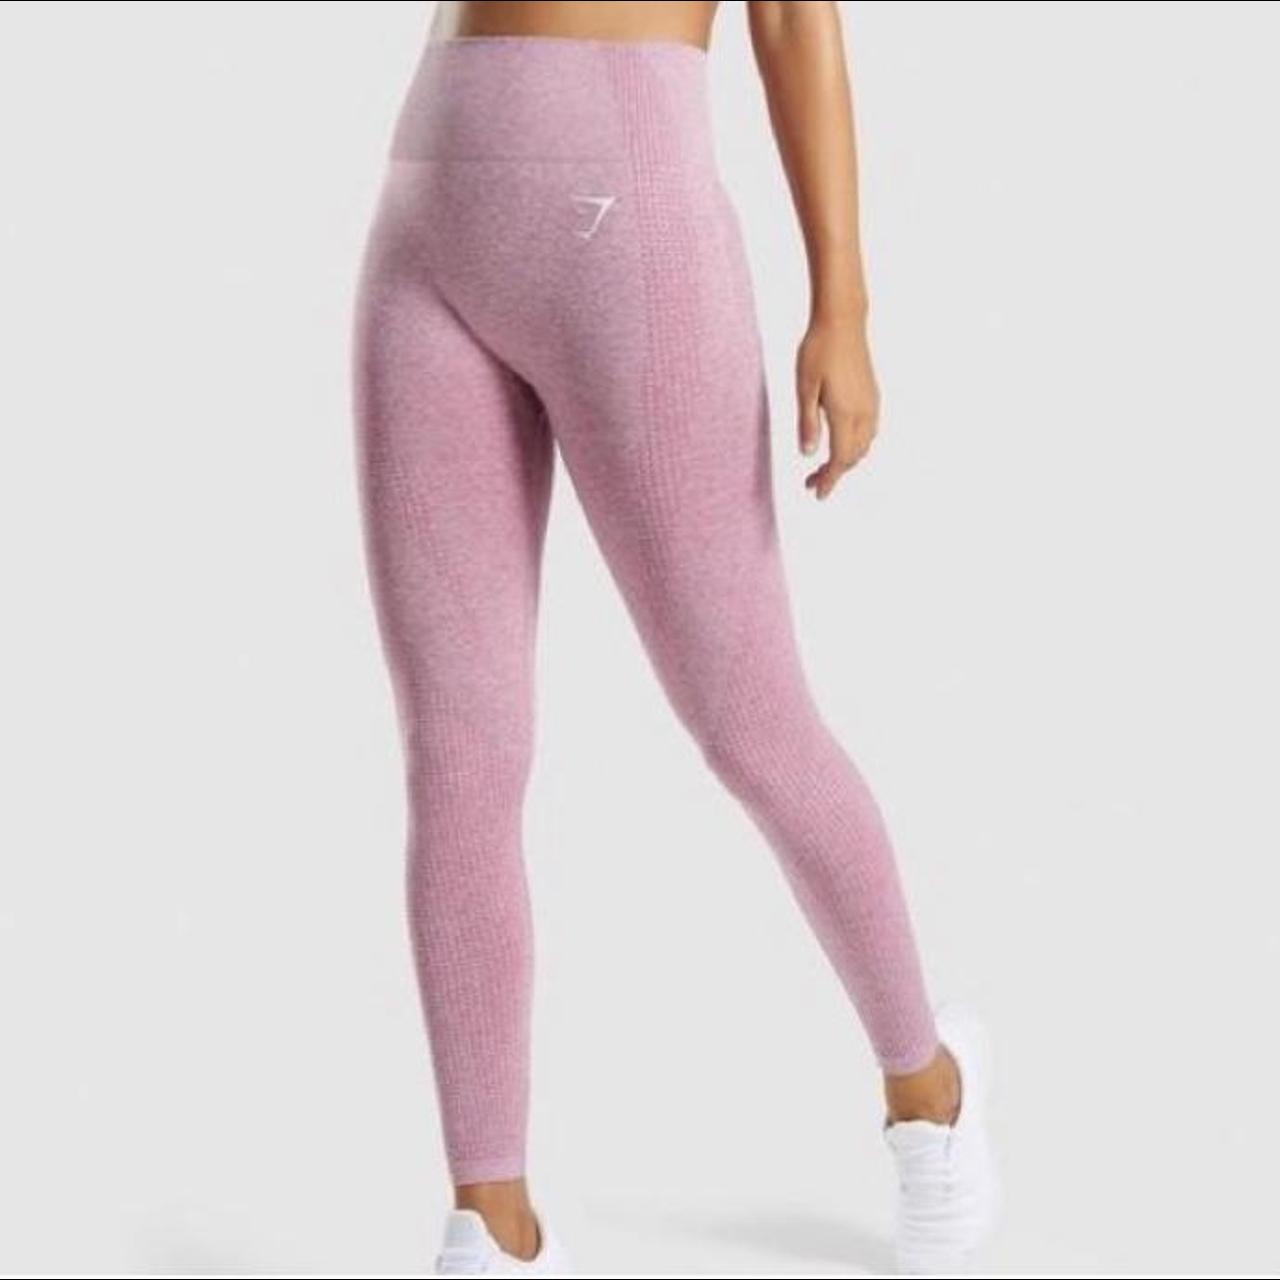 Gymshark seamless pink leggings Fits like a true - Depop